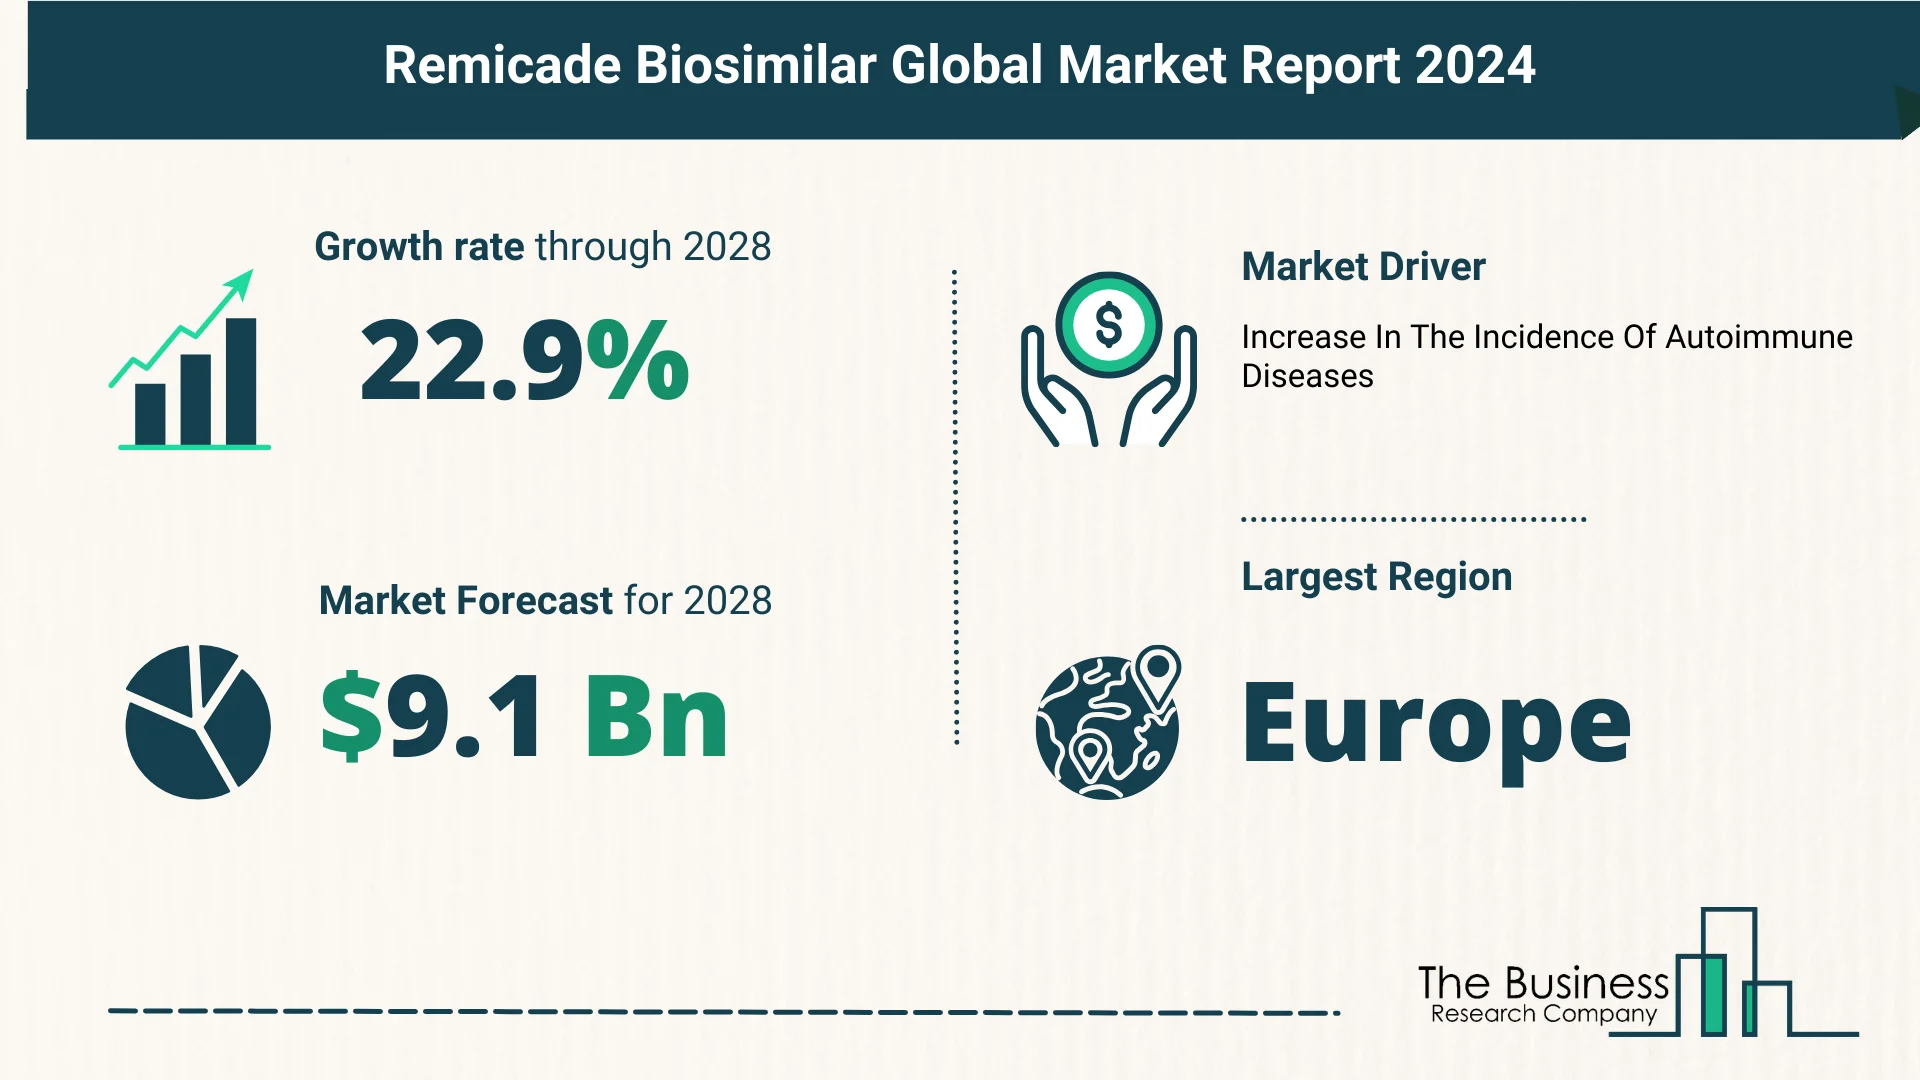 Key Takeaways From The Global Remicade Biosimilar Market Forecast 2024